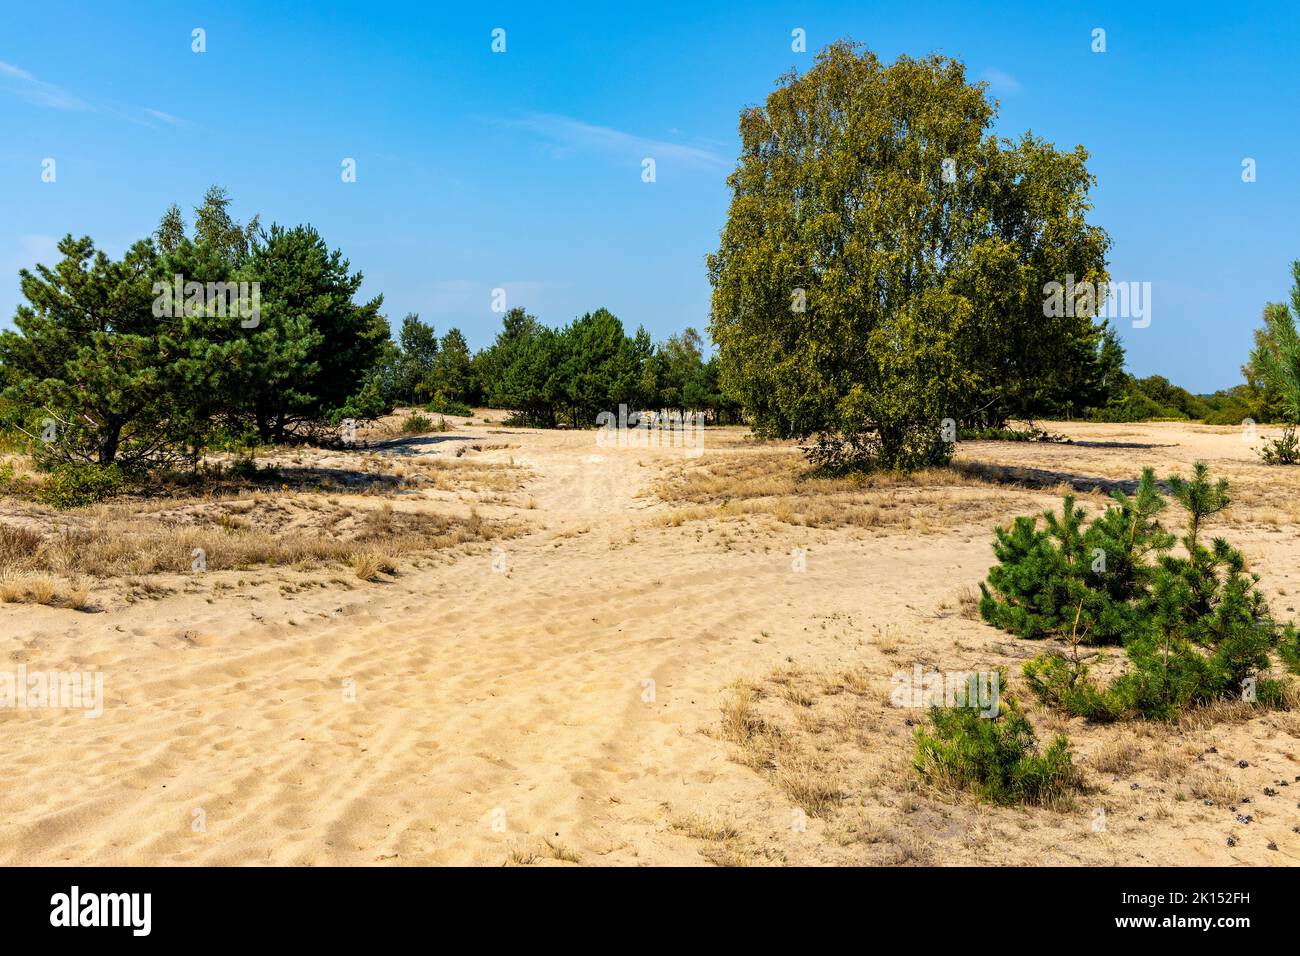 Sand dune Wydma Pekatka with scarce vegetation overlooking Bagno Calowanie Swamp wildlife reserve in Podblel village south of Warsaw in Mazovia region Stock Photo